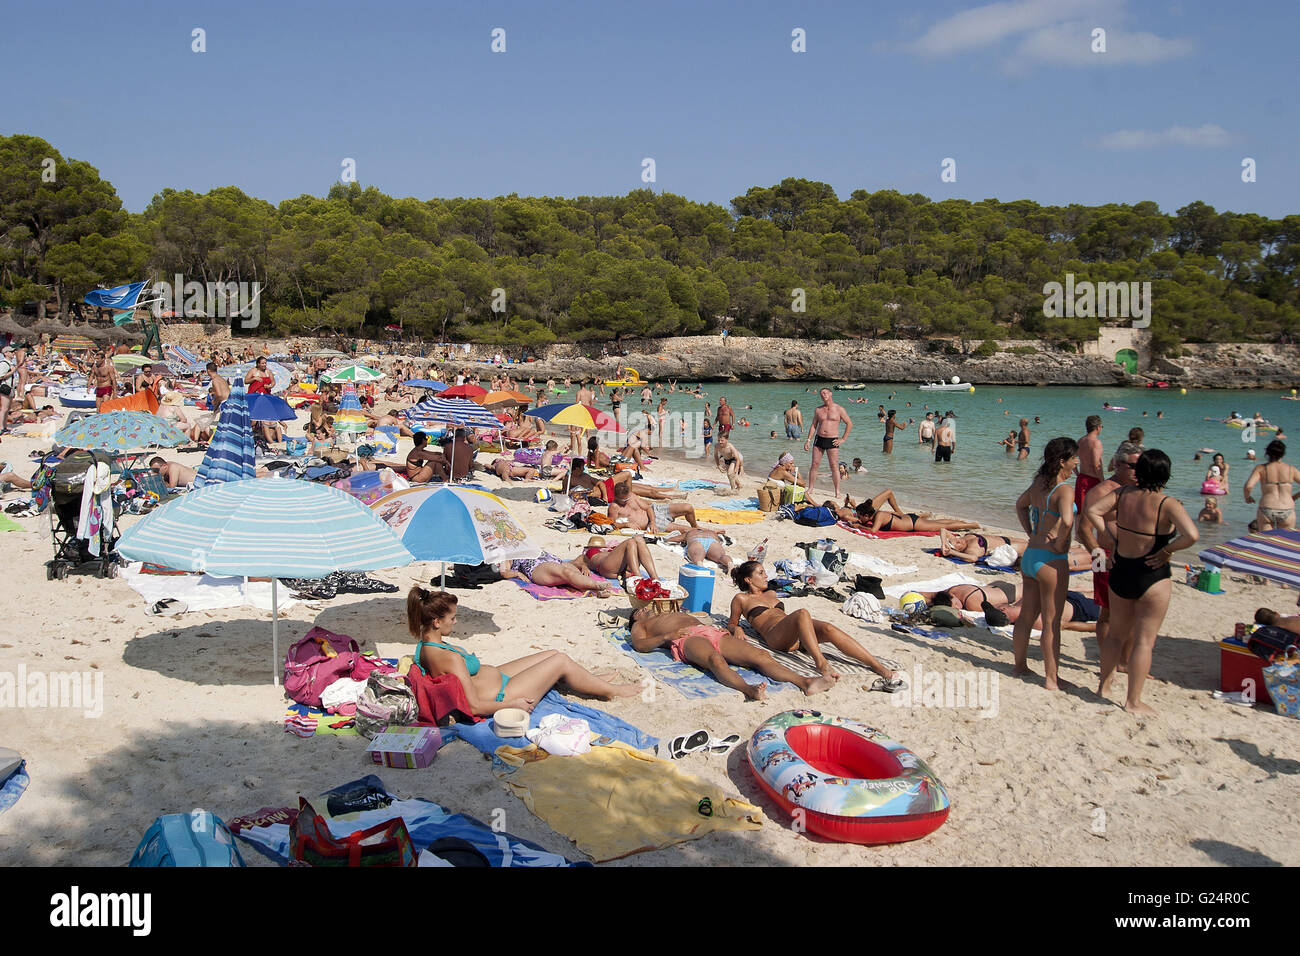 a beautiful beach view, Palma de Mallorca, Palma di Maiorca, summer, tourism, relax, holidays, beach, seaside, crowded beach Stock Photo